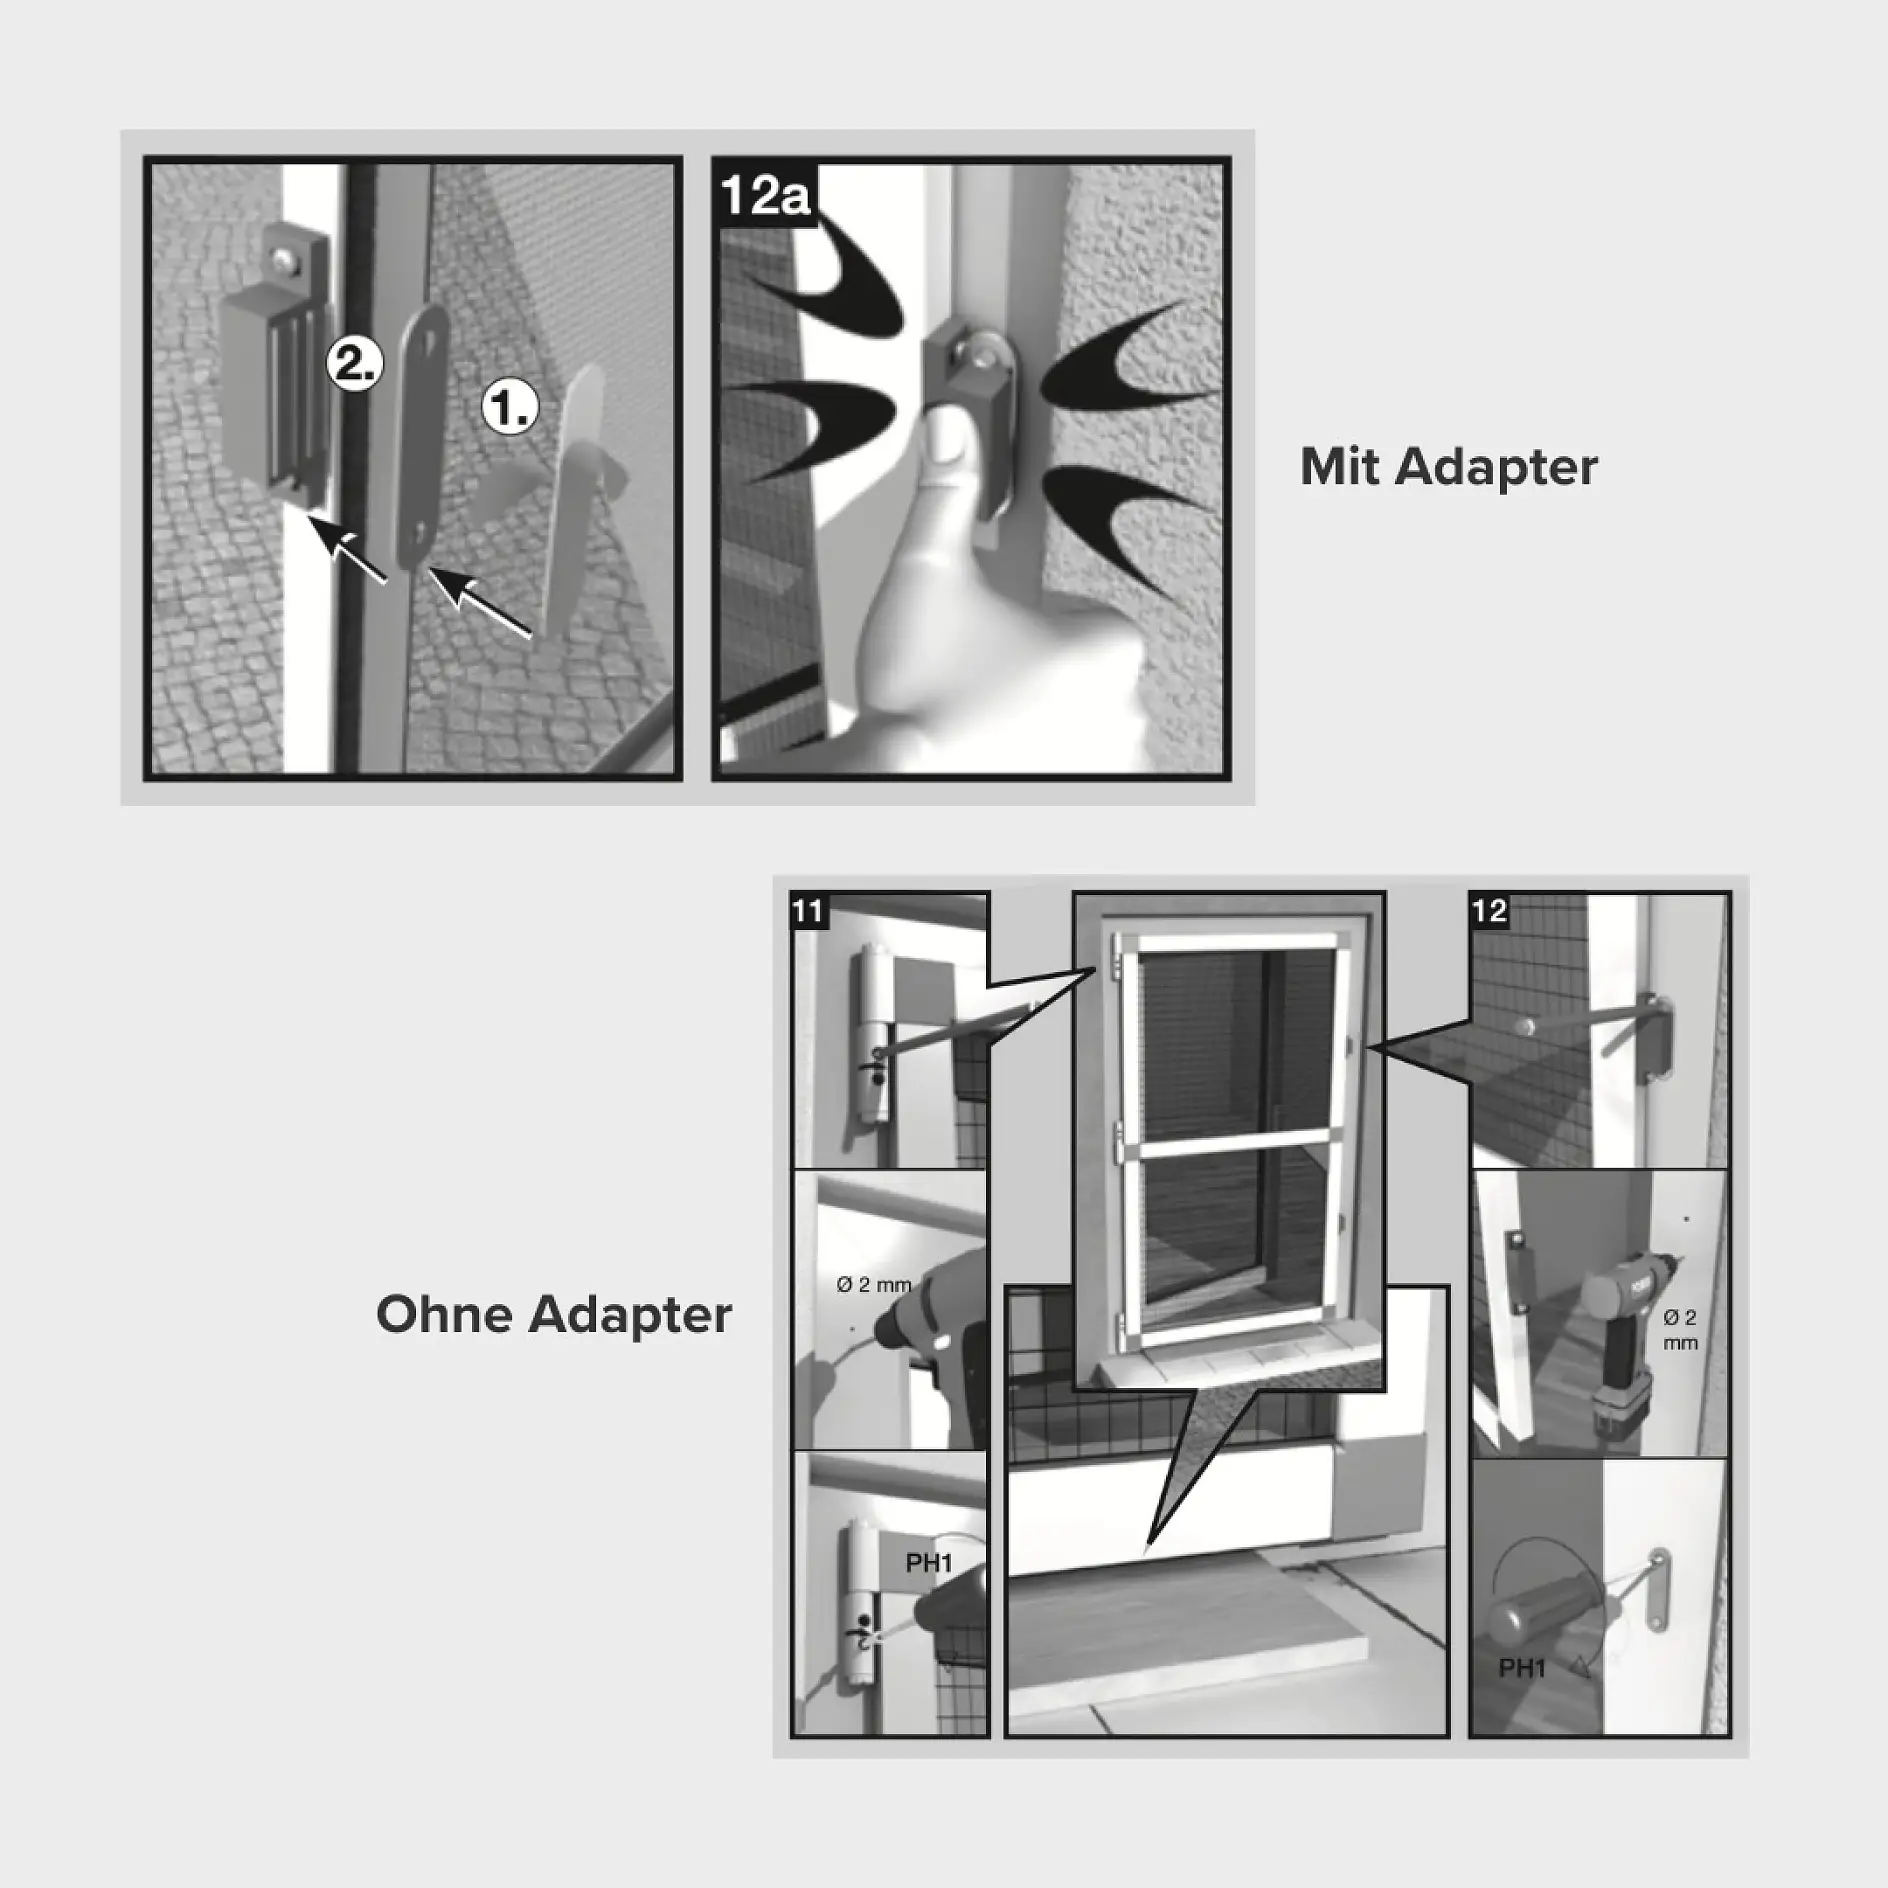 ALU Comfort Türen und Adapter Montageanleitung Schritt 12 Kombiniert